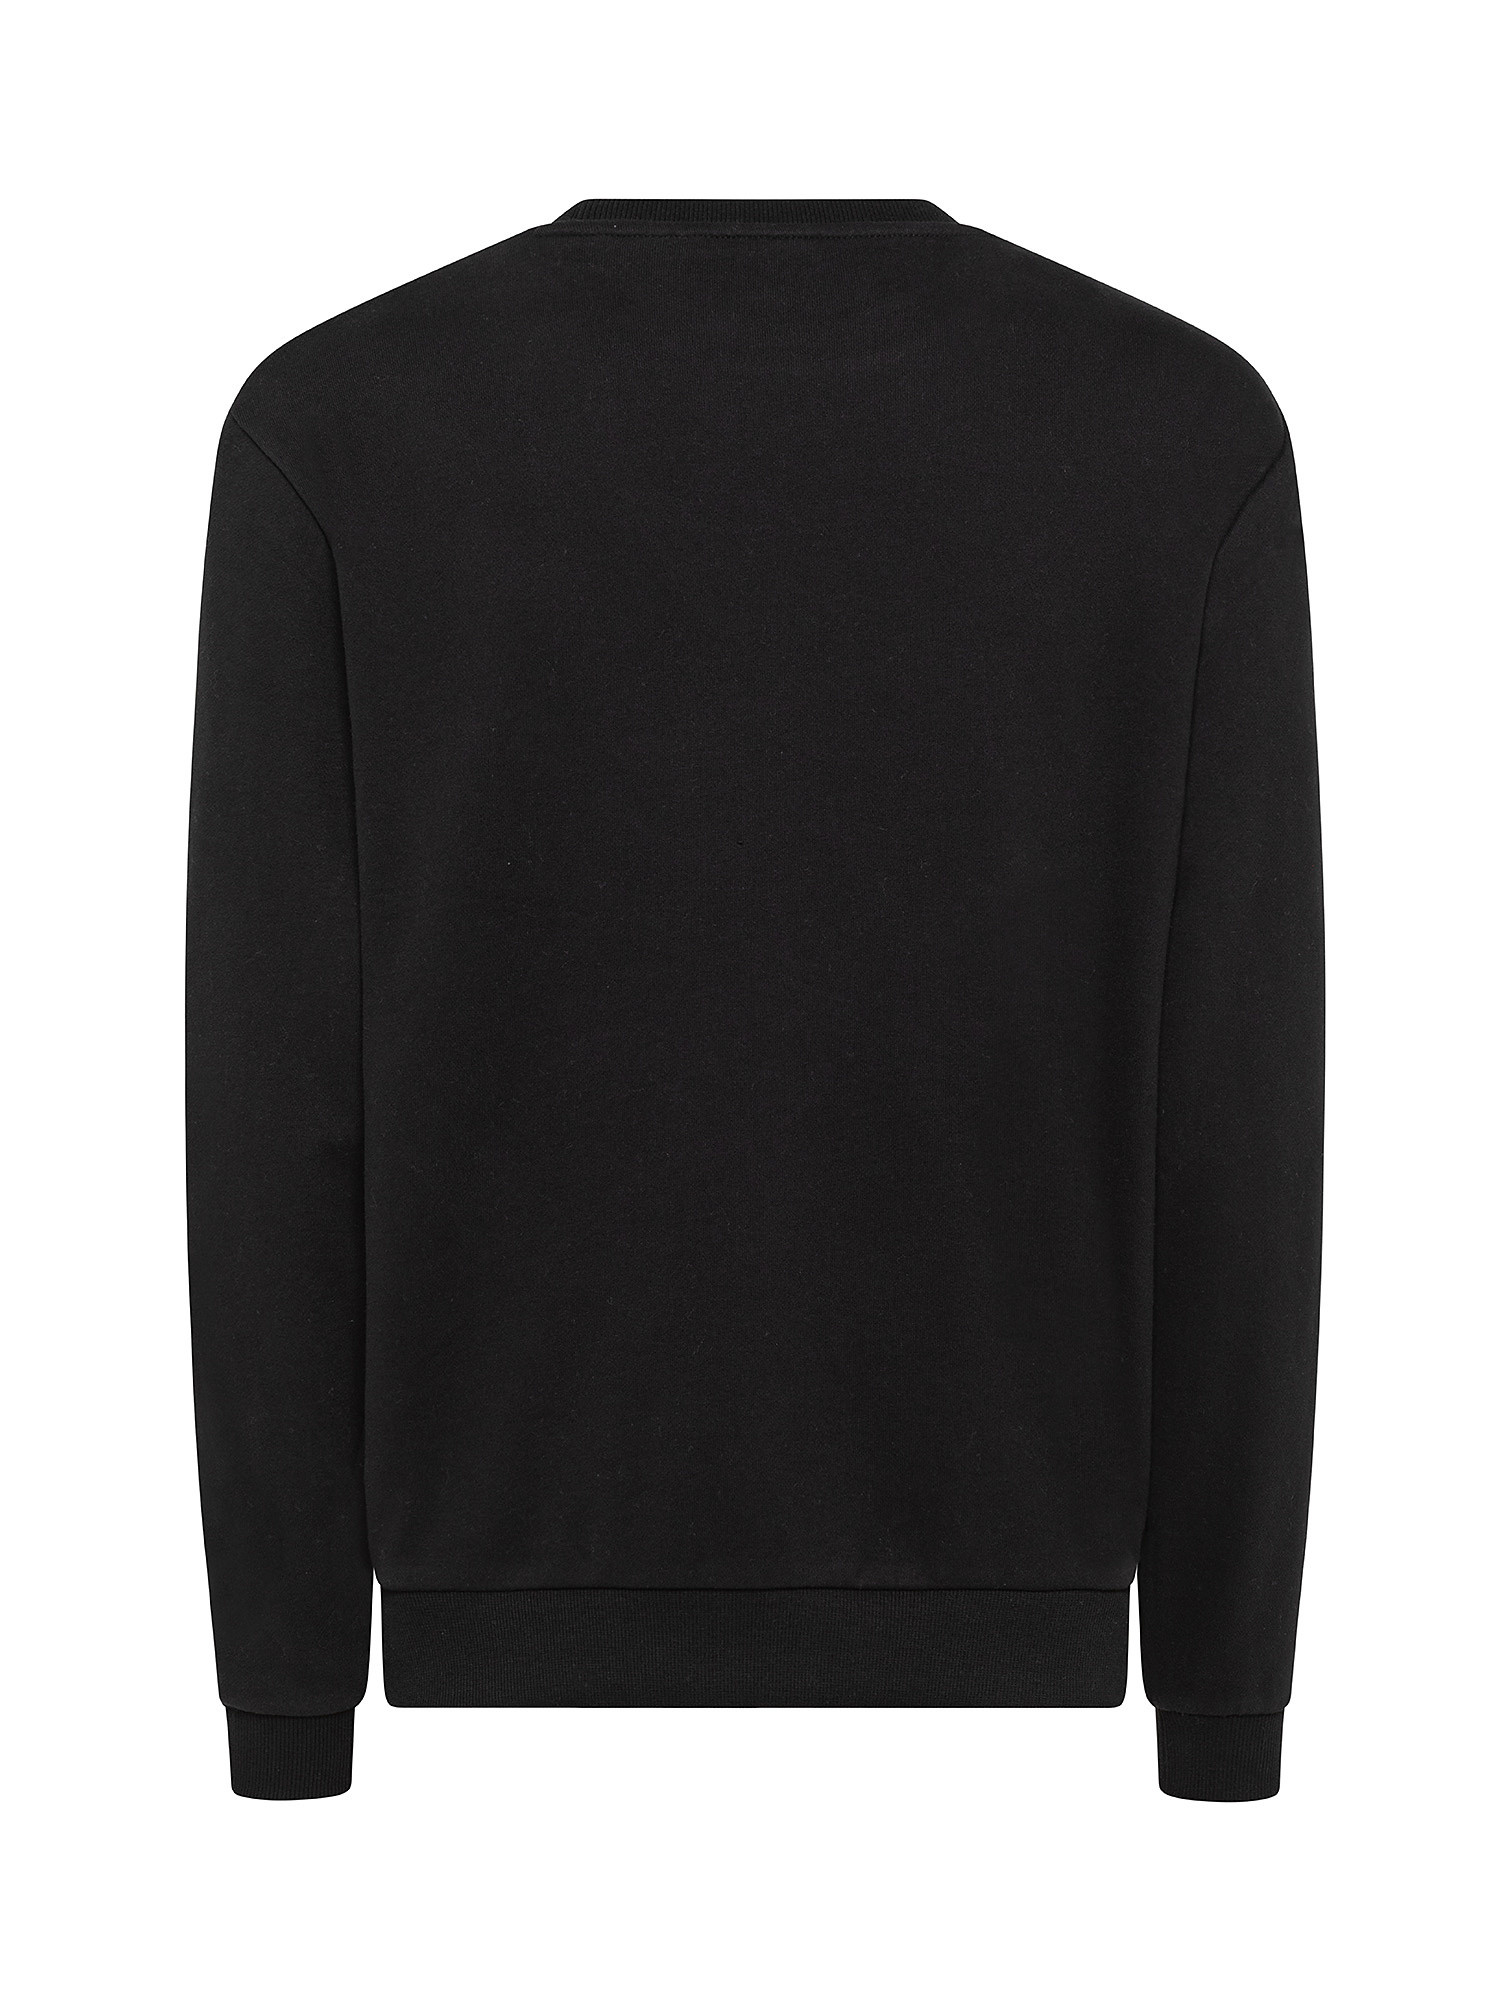 Sweatshirt with print, Black, large image number 1